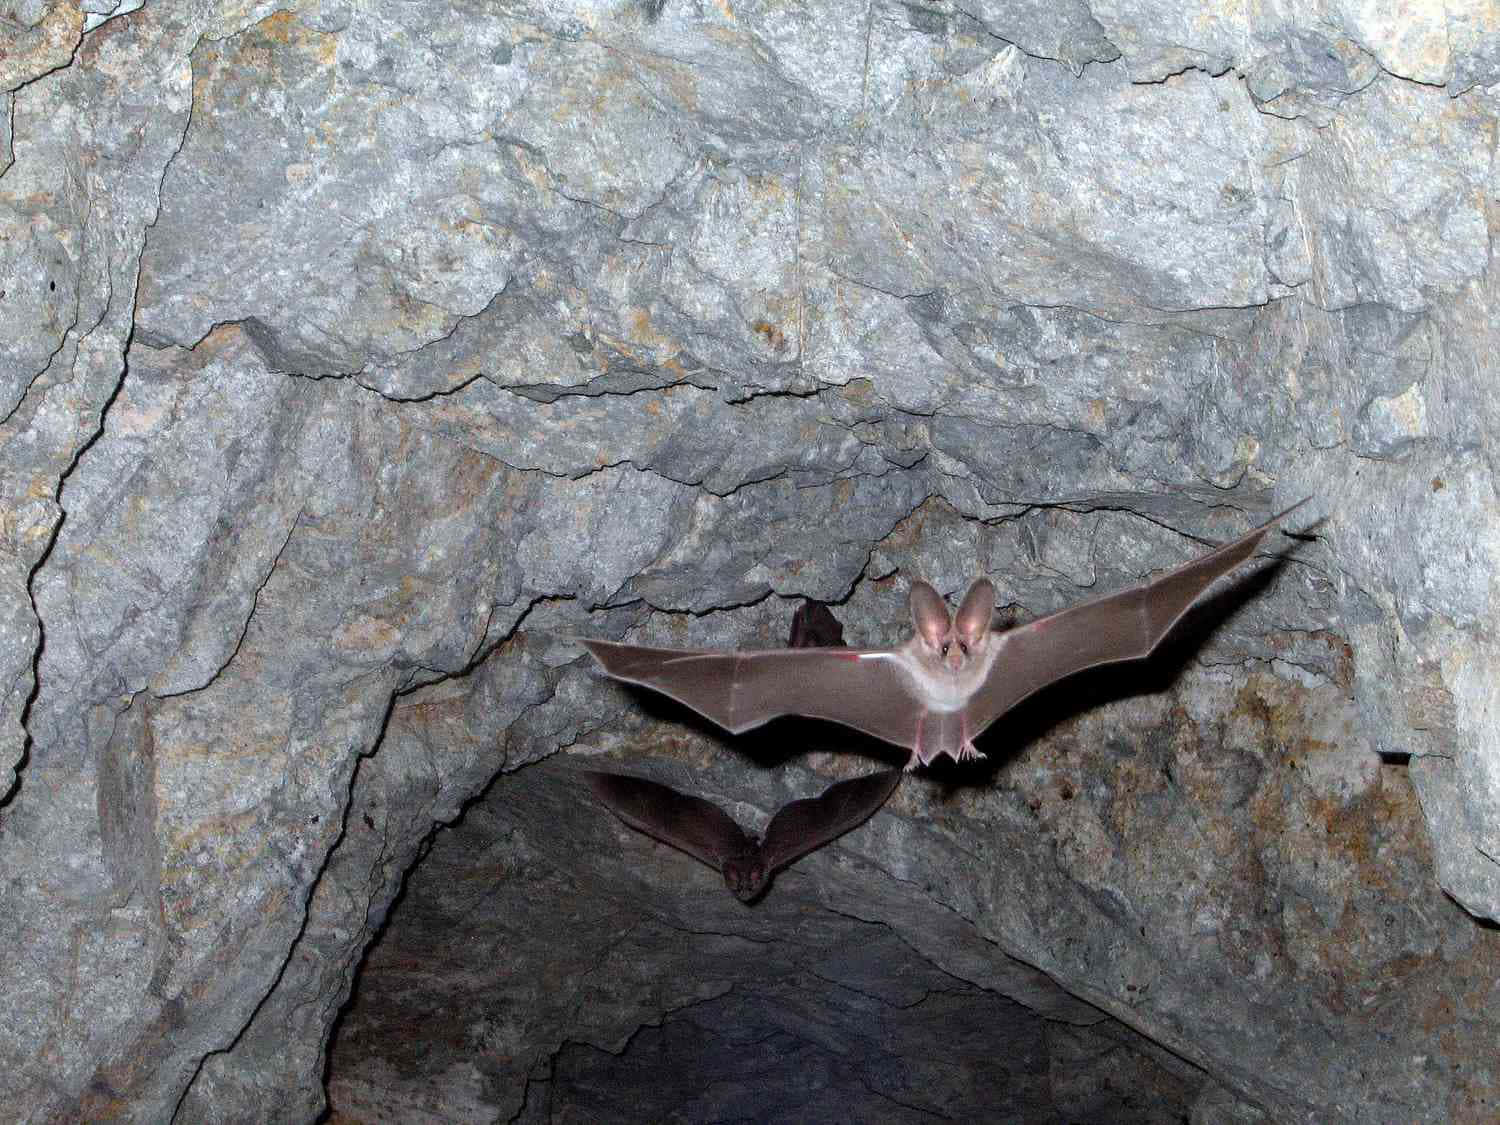 Sötafladdermöss I Grotta-bilder